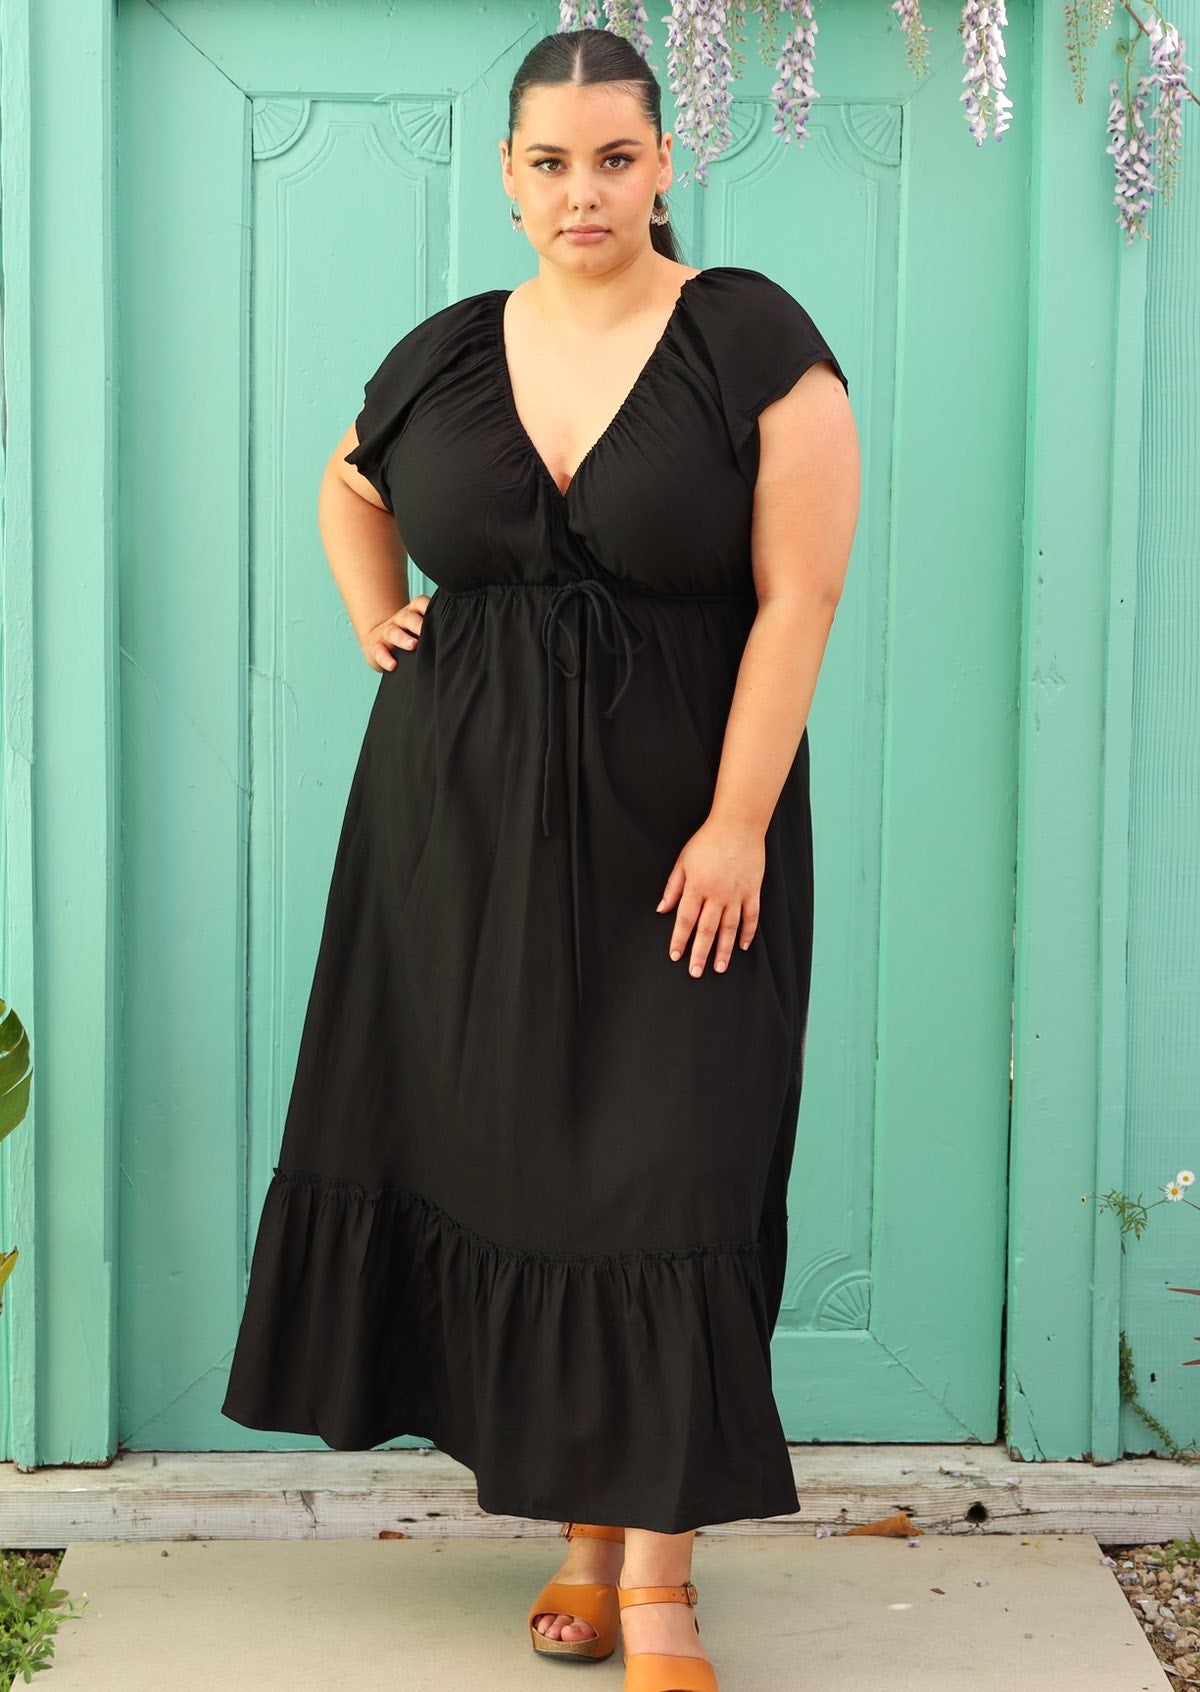 Curve sized woman wearing black maxi dress